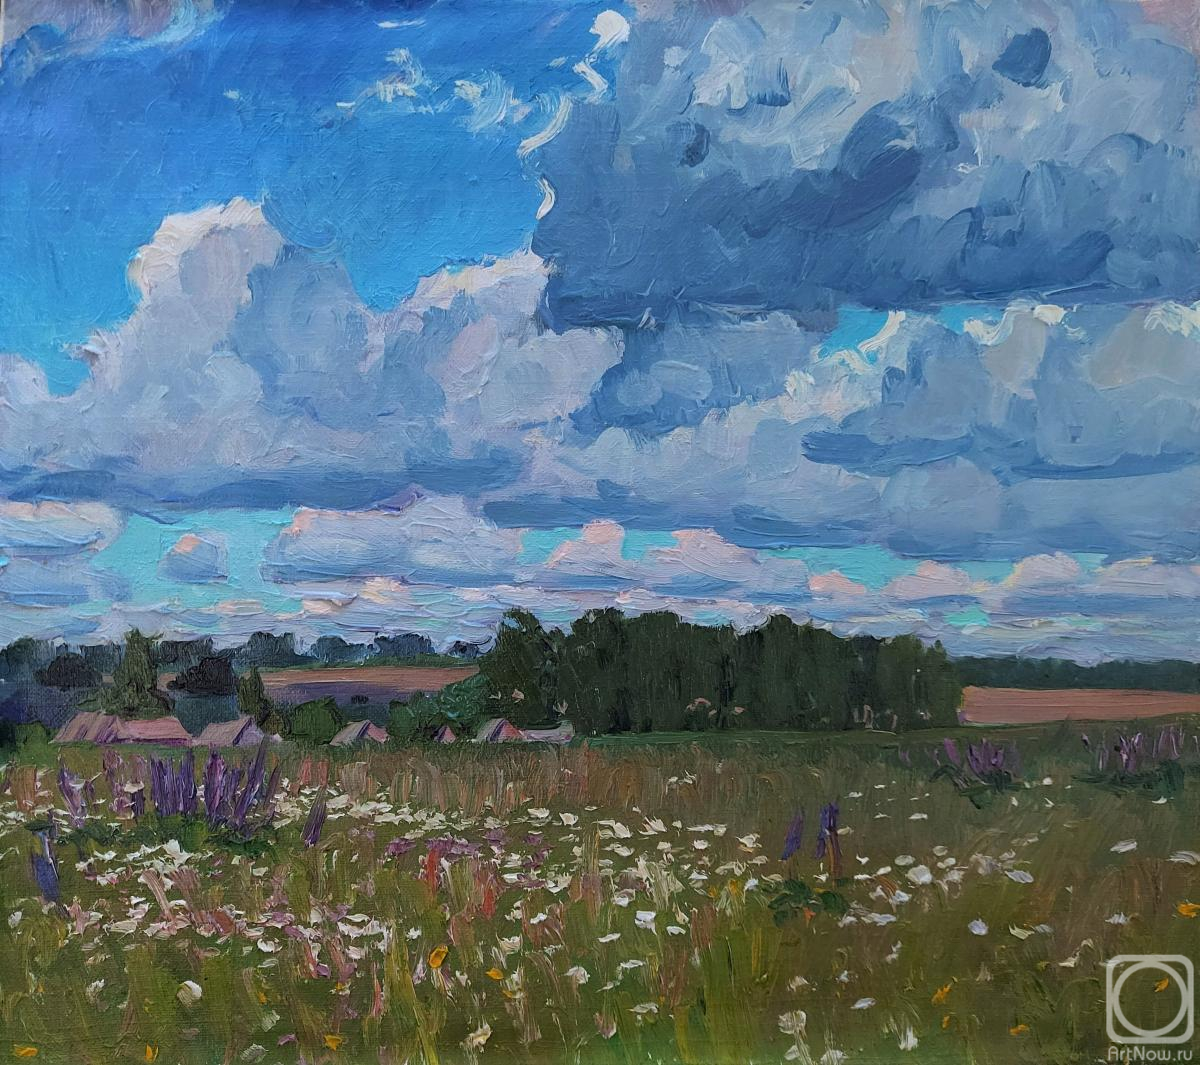 Melnikov Aleksandr. Cloudy sky over a blooming meadow